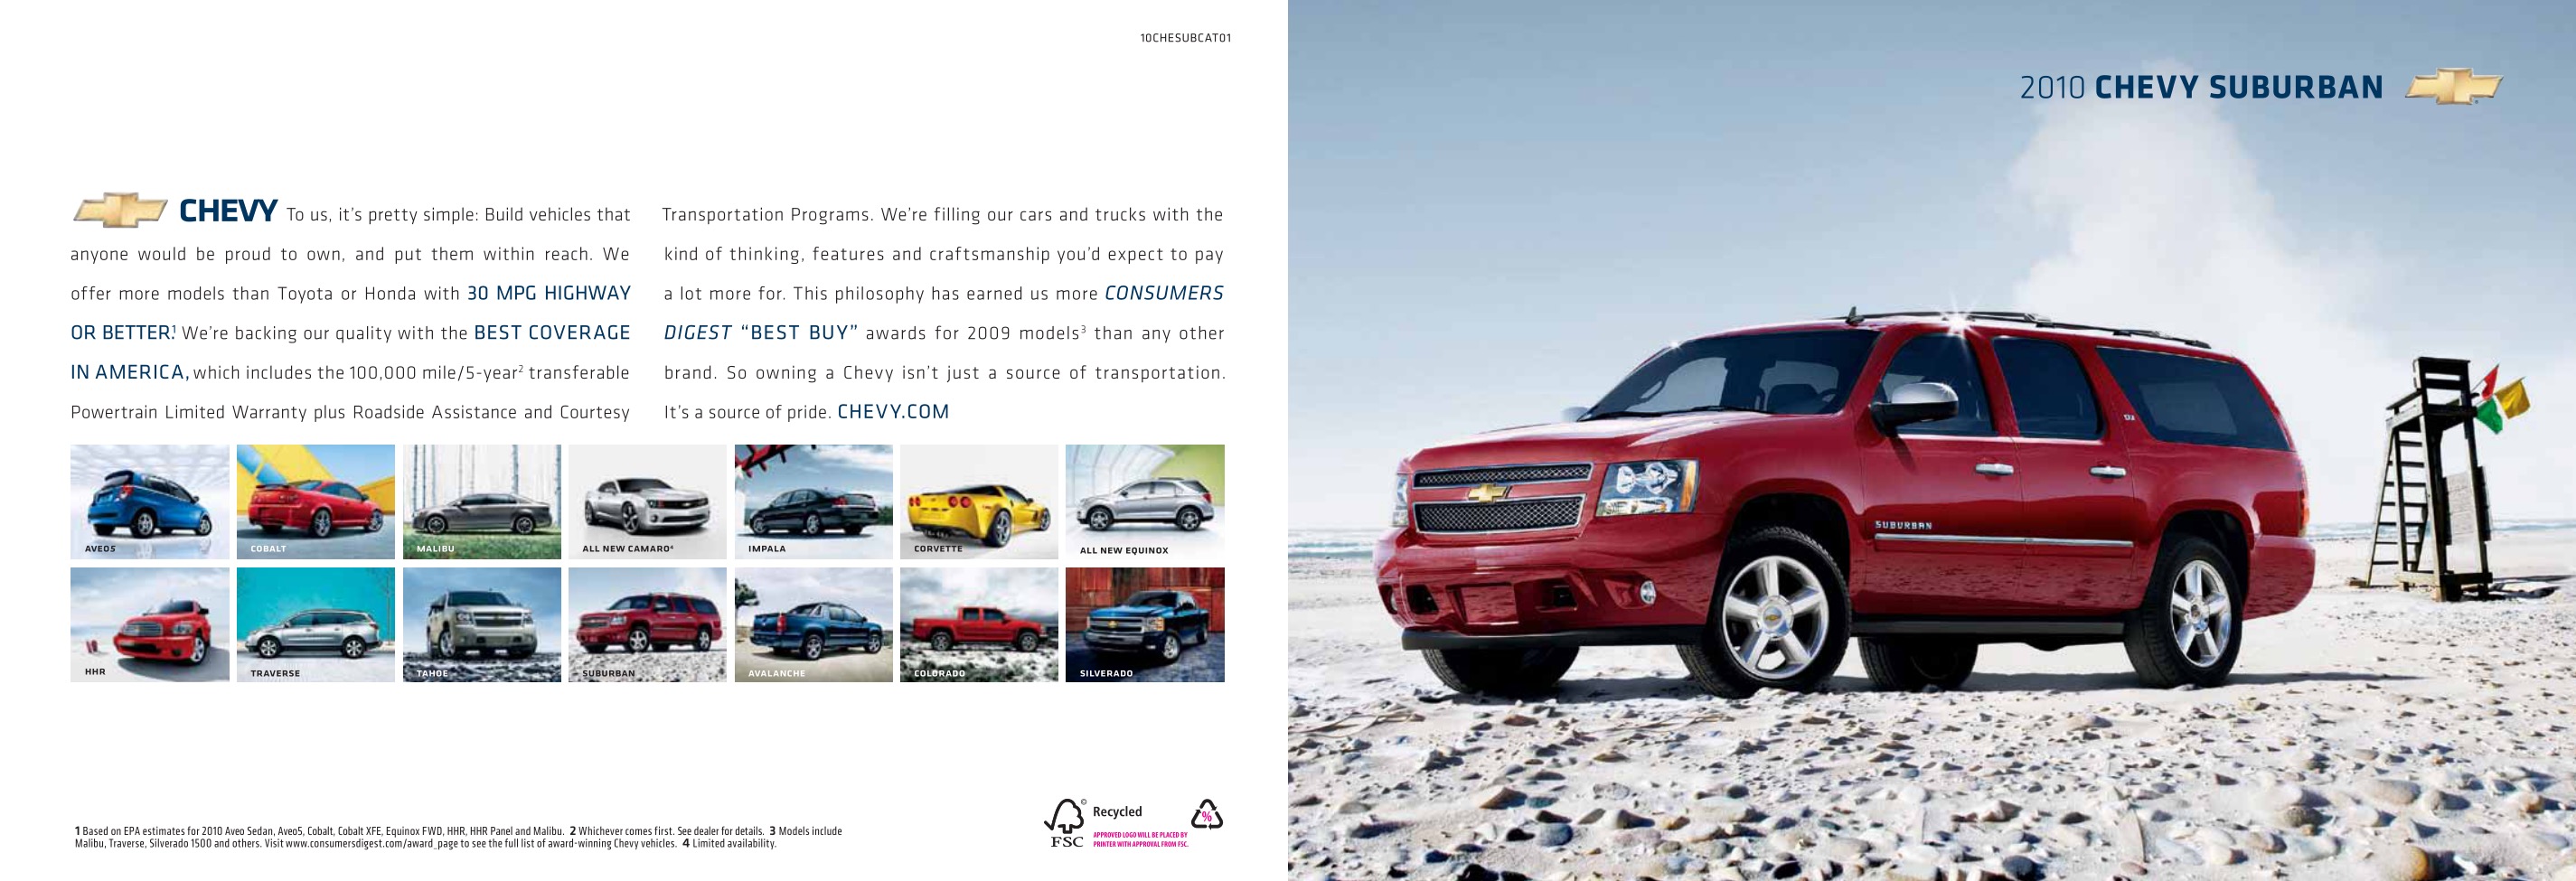 2010 Chevrolet Suburban Brochure